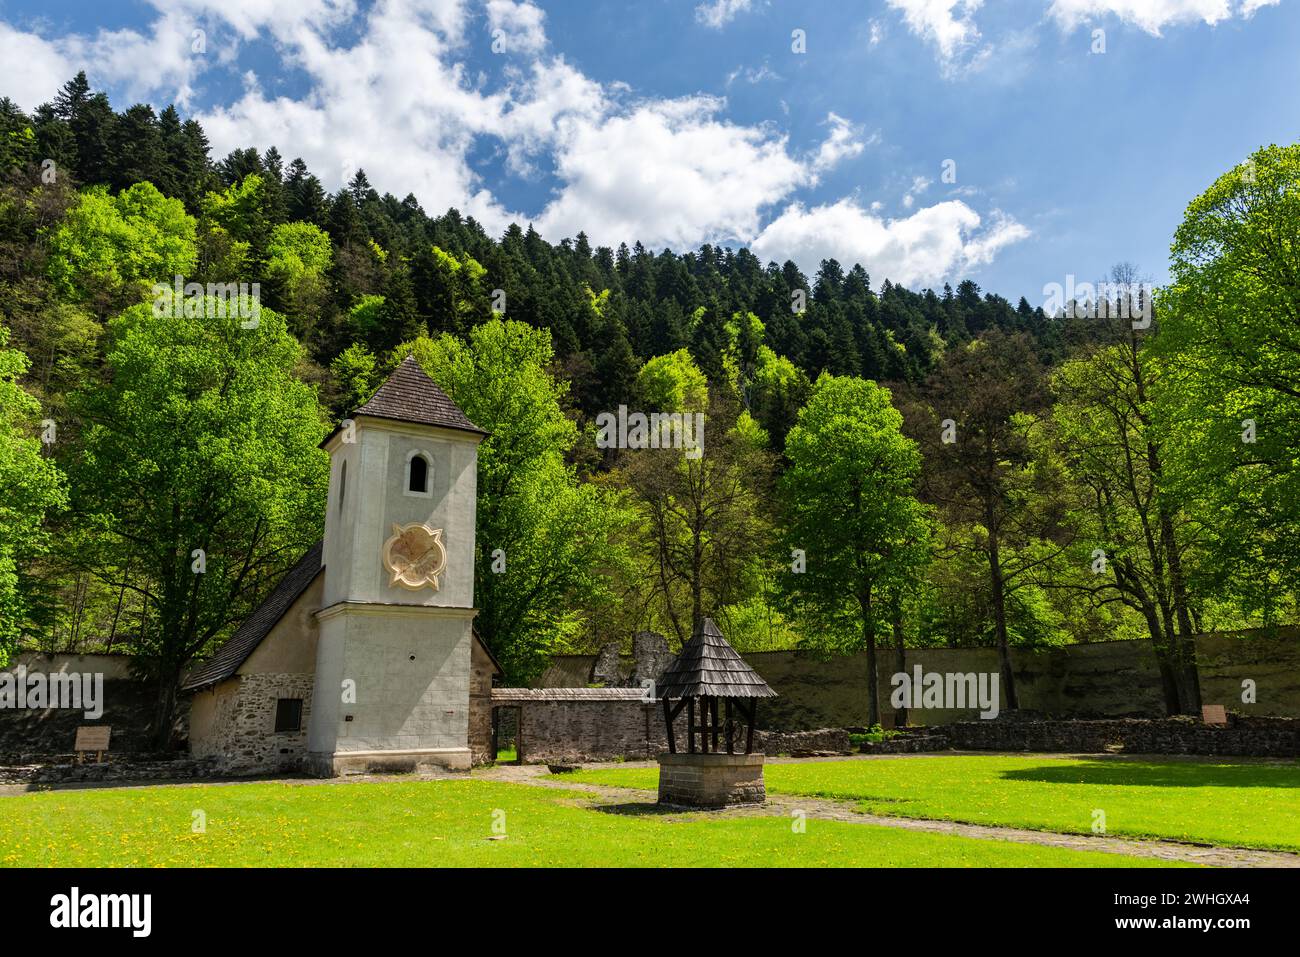 Red Monastery in Slovakia. Pieniny Mountains Architecture and Landmarks Stock Photo